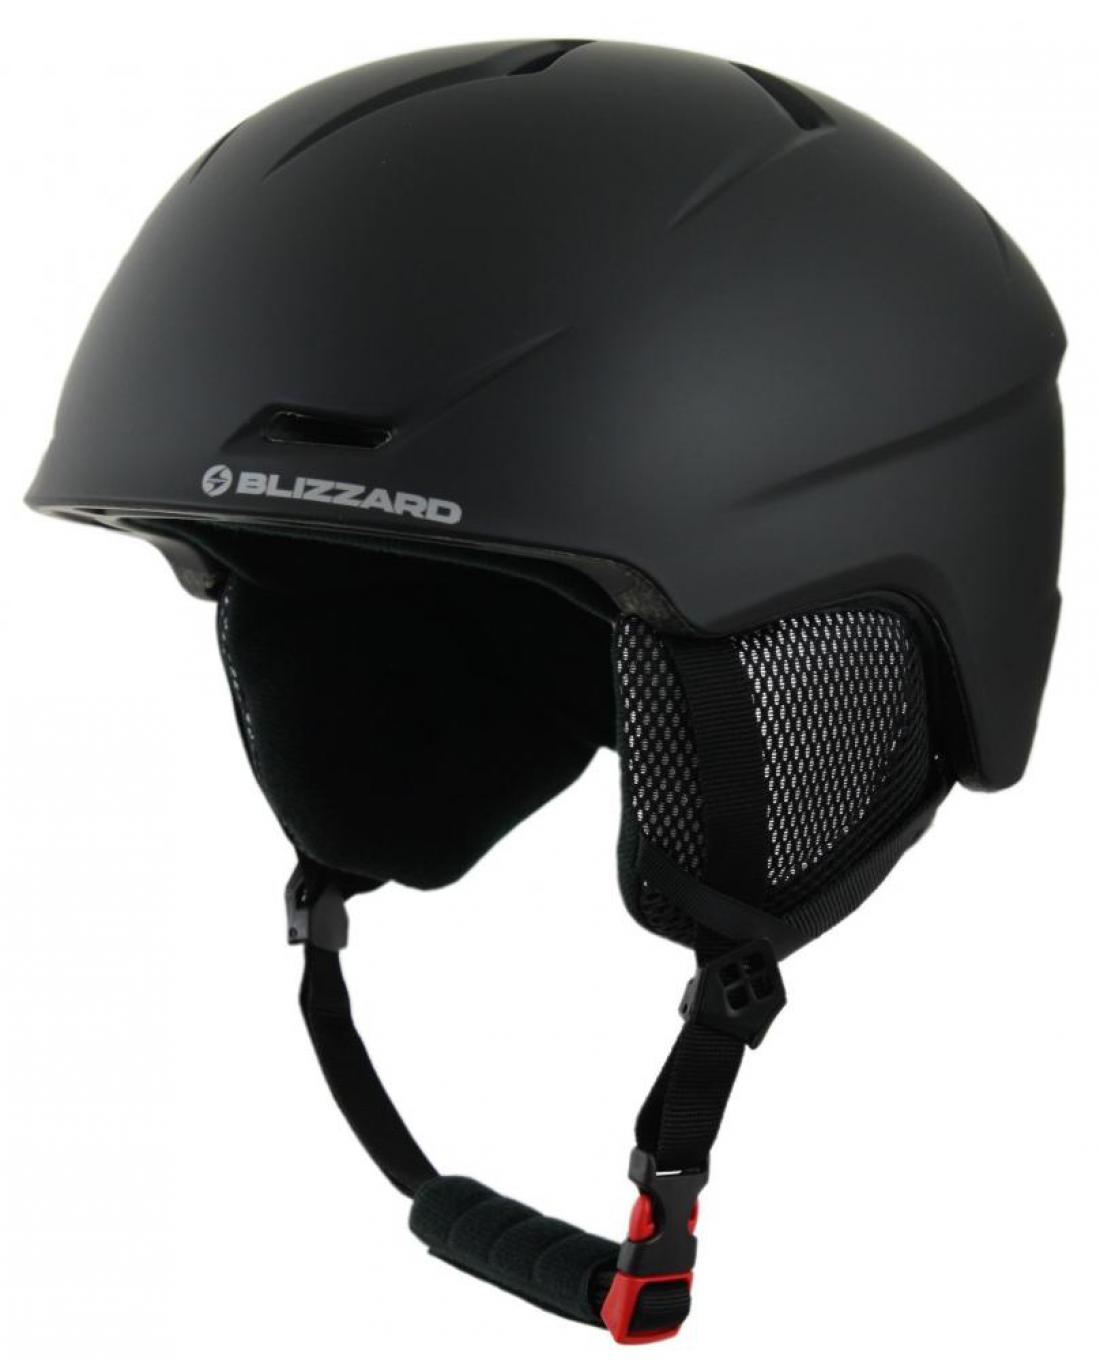 Spider ski helmet, black